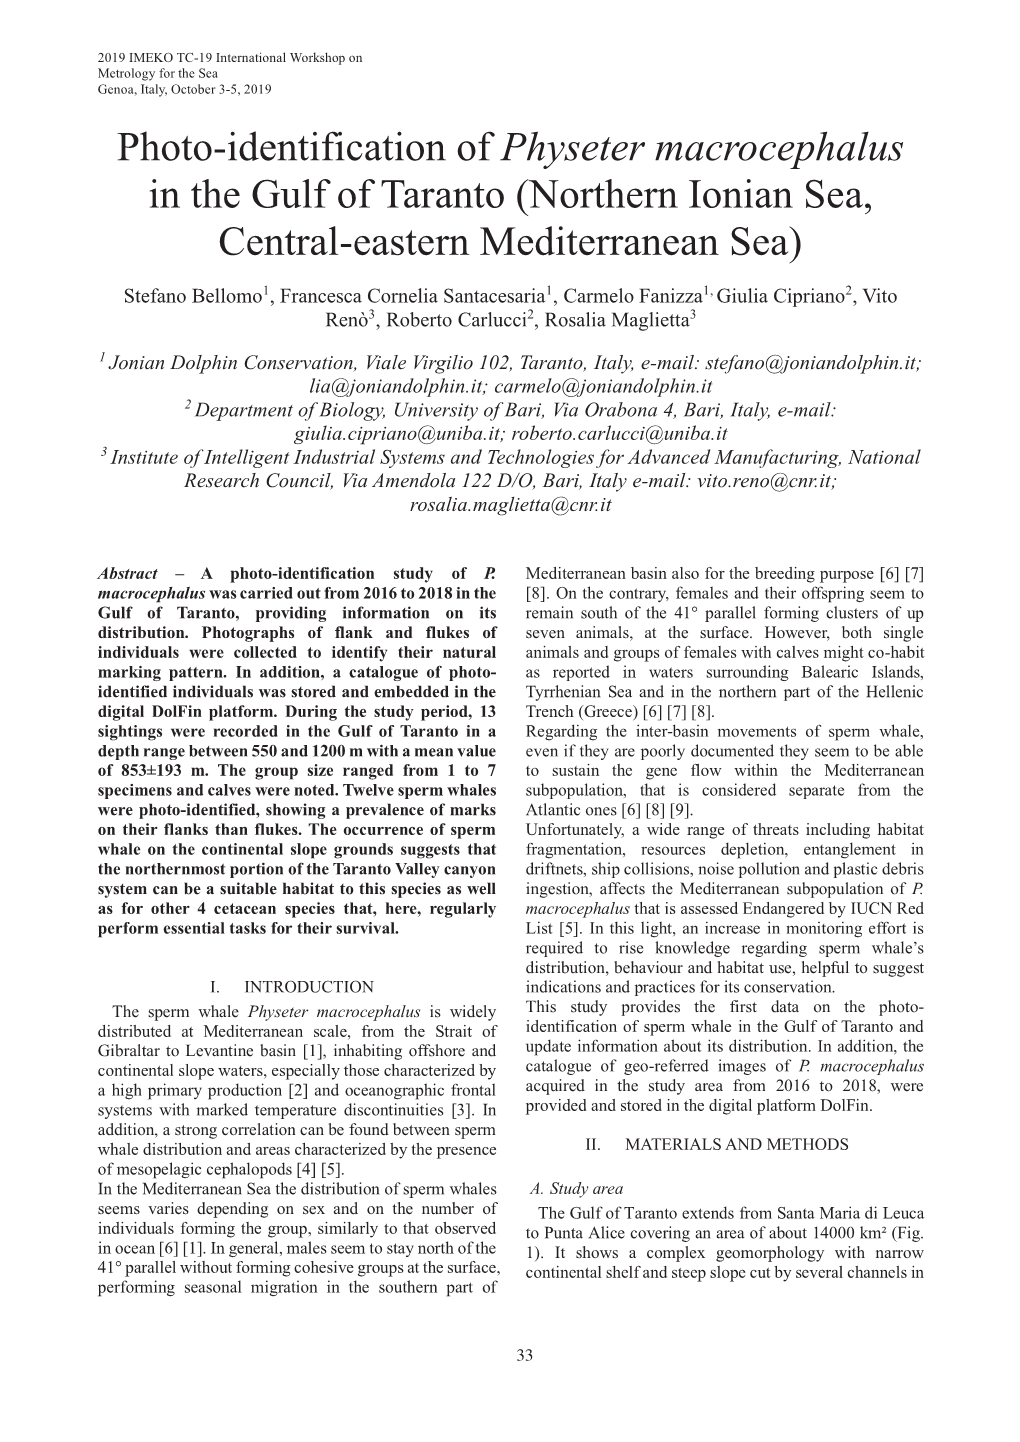 Photo-Identification of Physeter Macrocephalus in the Gulf of Taranto (Northern Ionian Sea, Central-Eastern Mediterranean Sea)